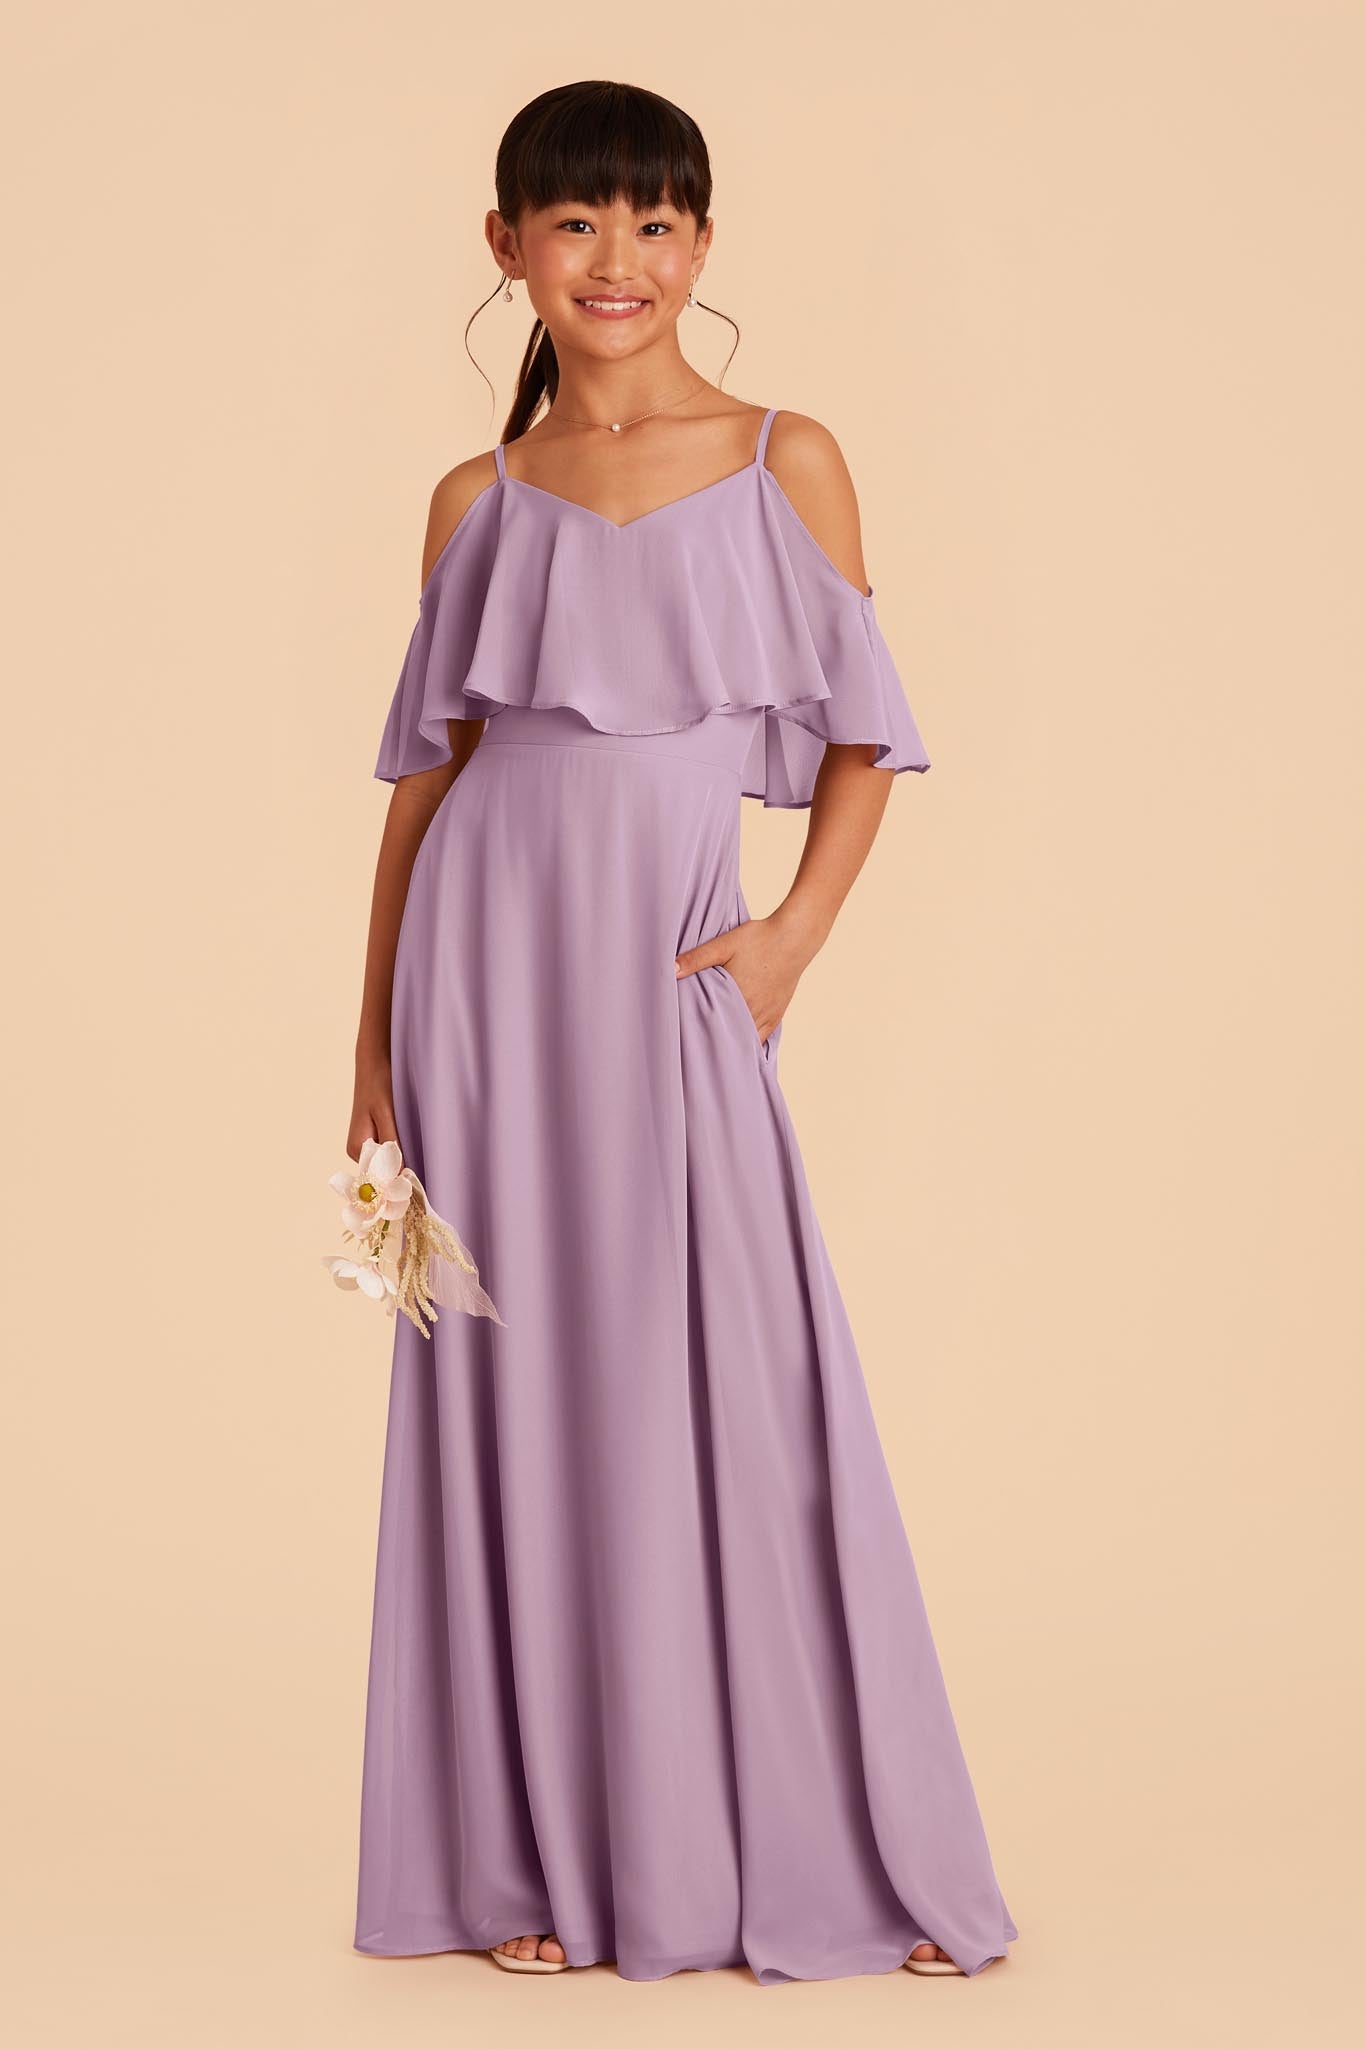 Janie Convertible Junior Bridesmaid Dress in Lavender